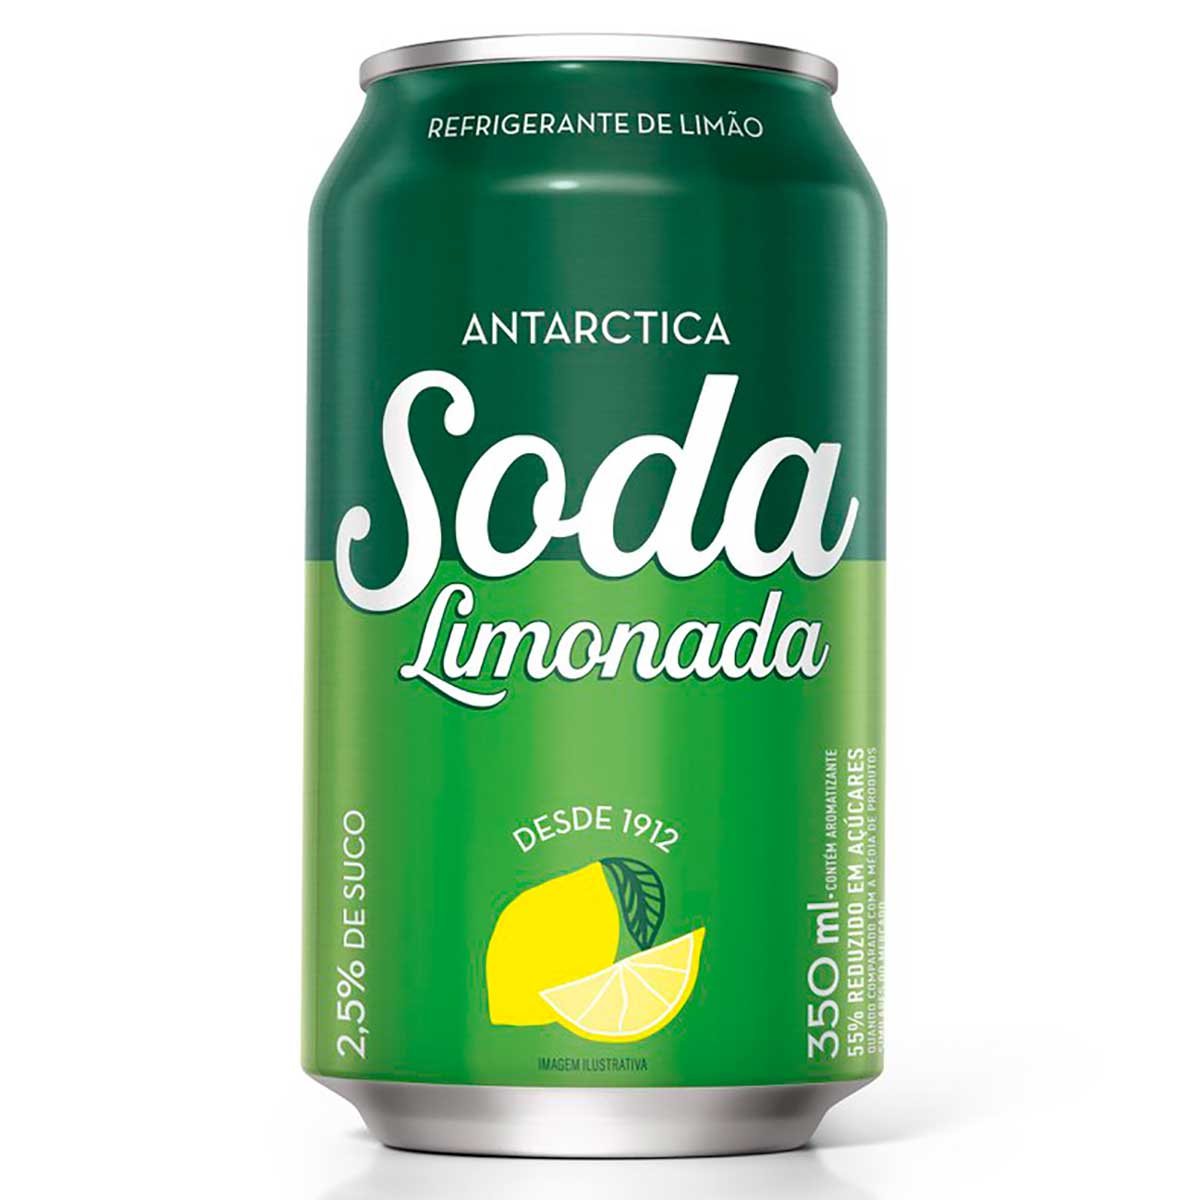 refrigerante-soda-limonada-antarctica-lata-350ml-1.jpg